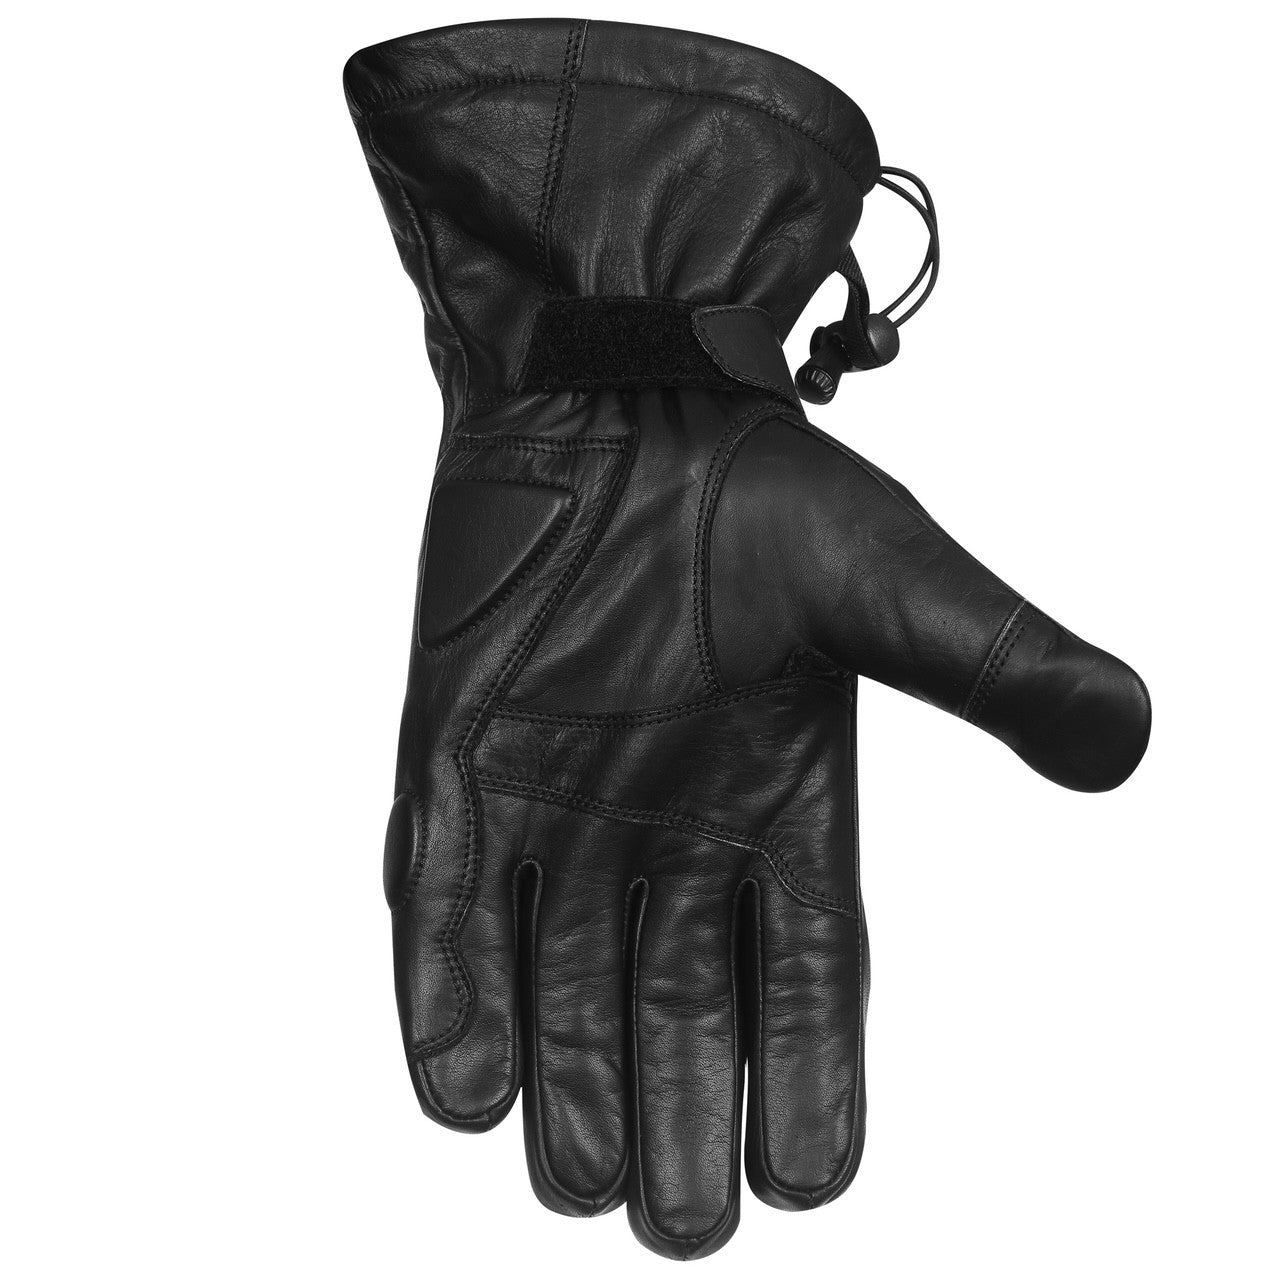 Vance VL410 Impulse Waterproof Leather Motorcycle Gloves - palm